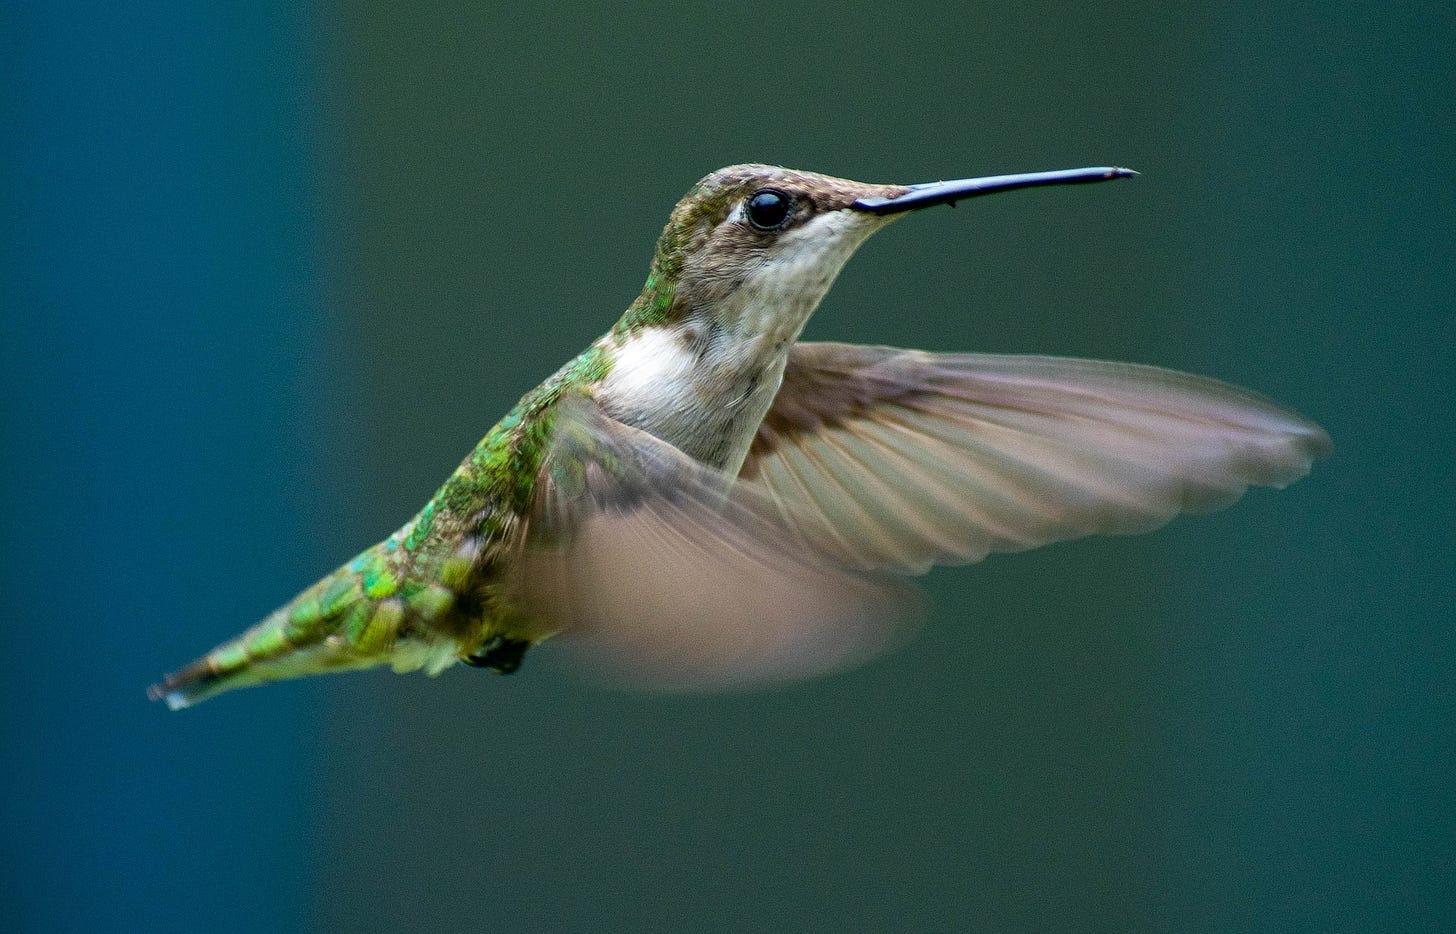 Image of hummingbird flying